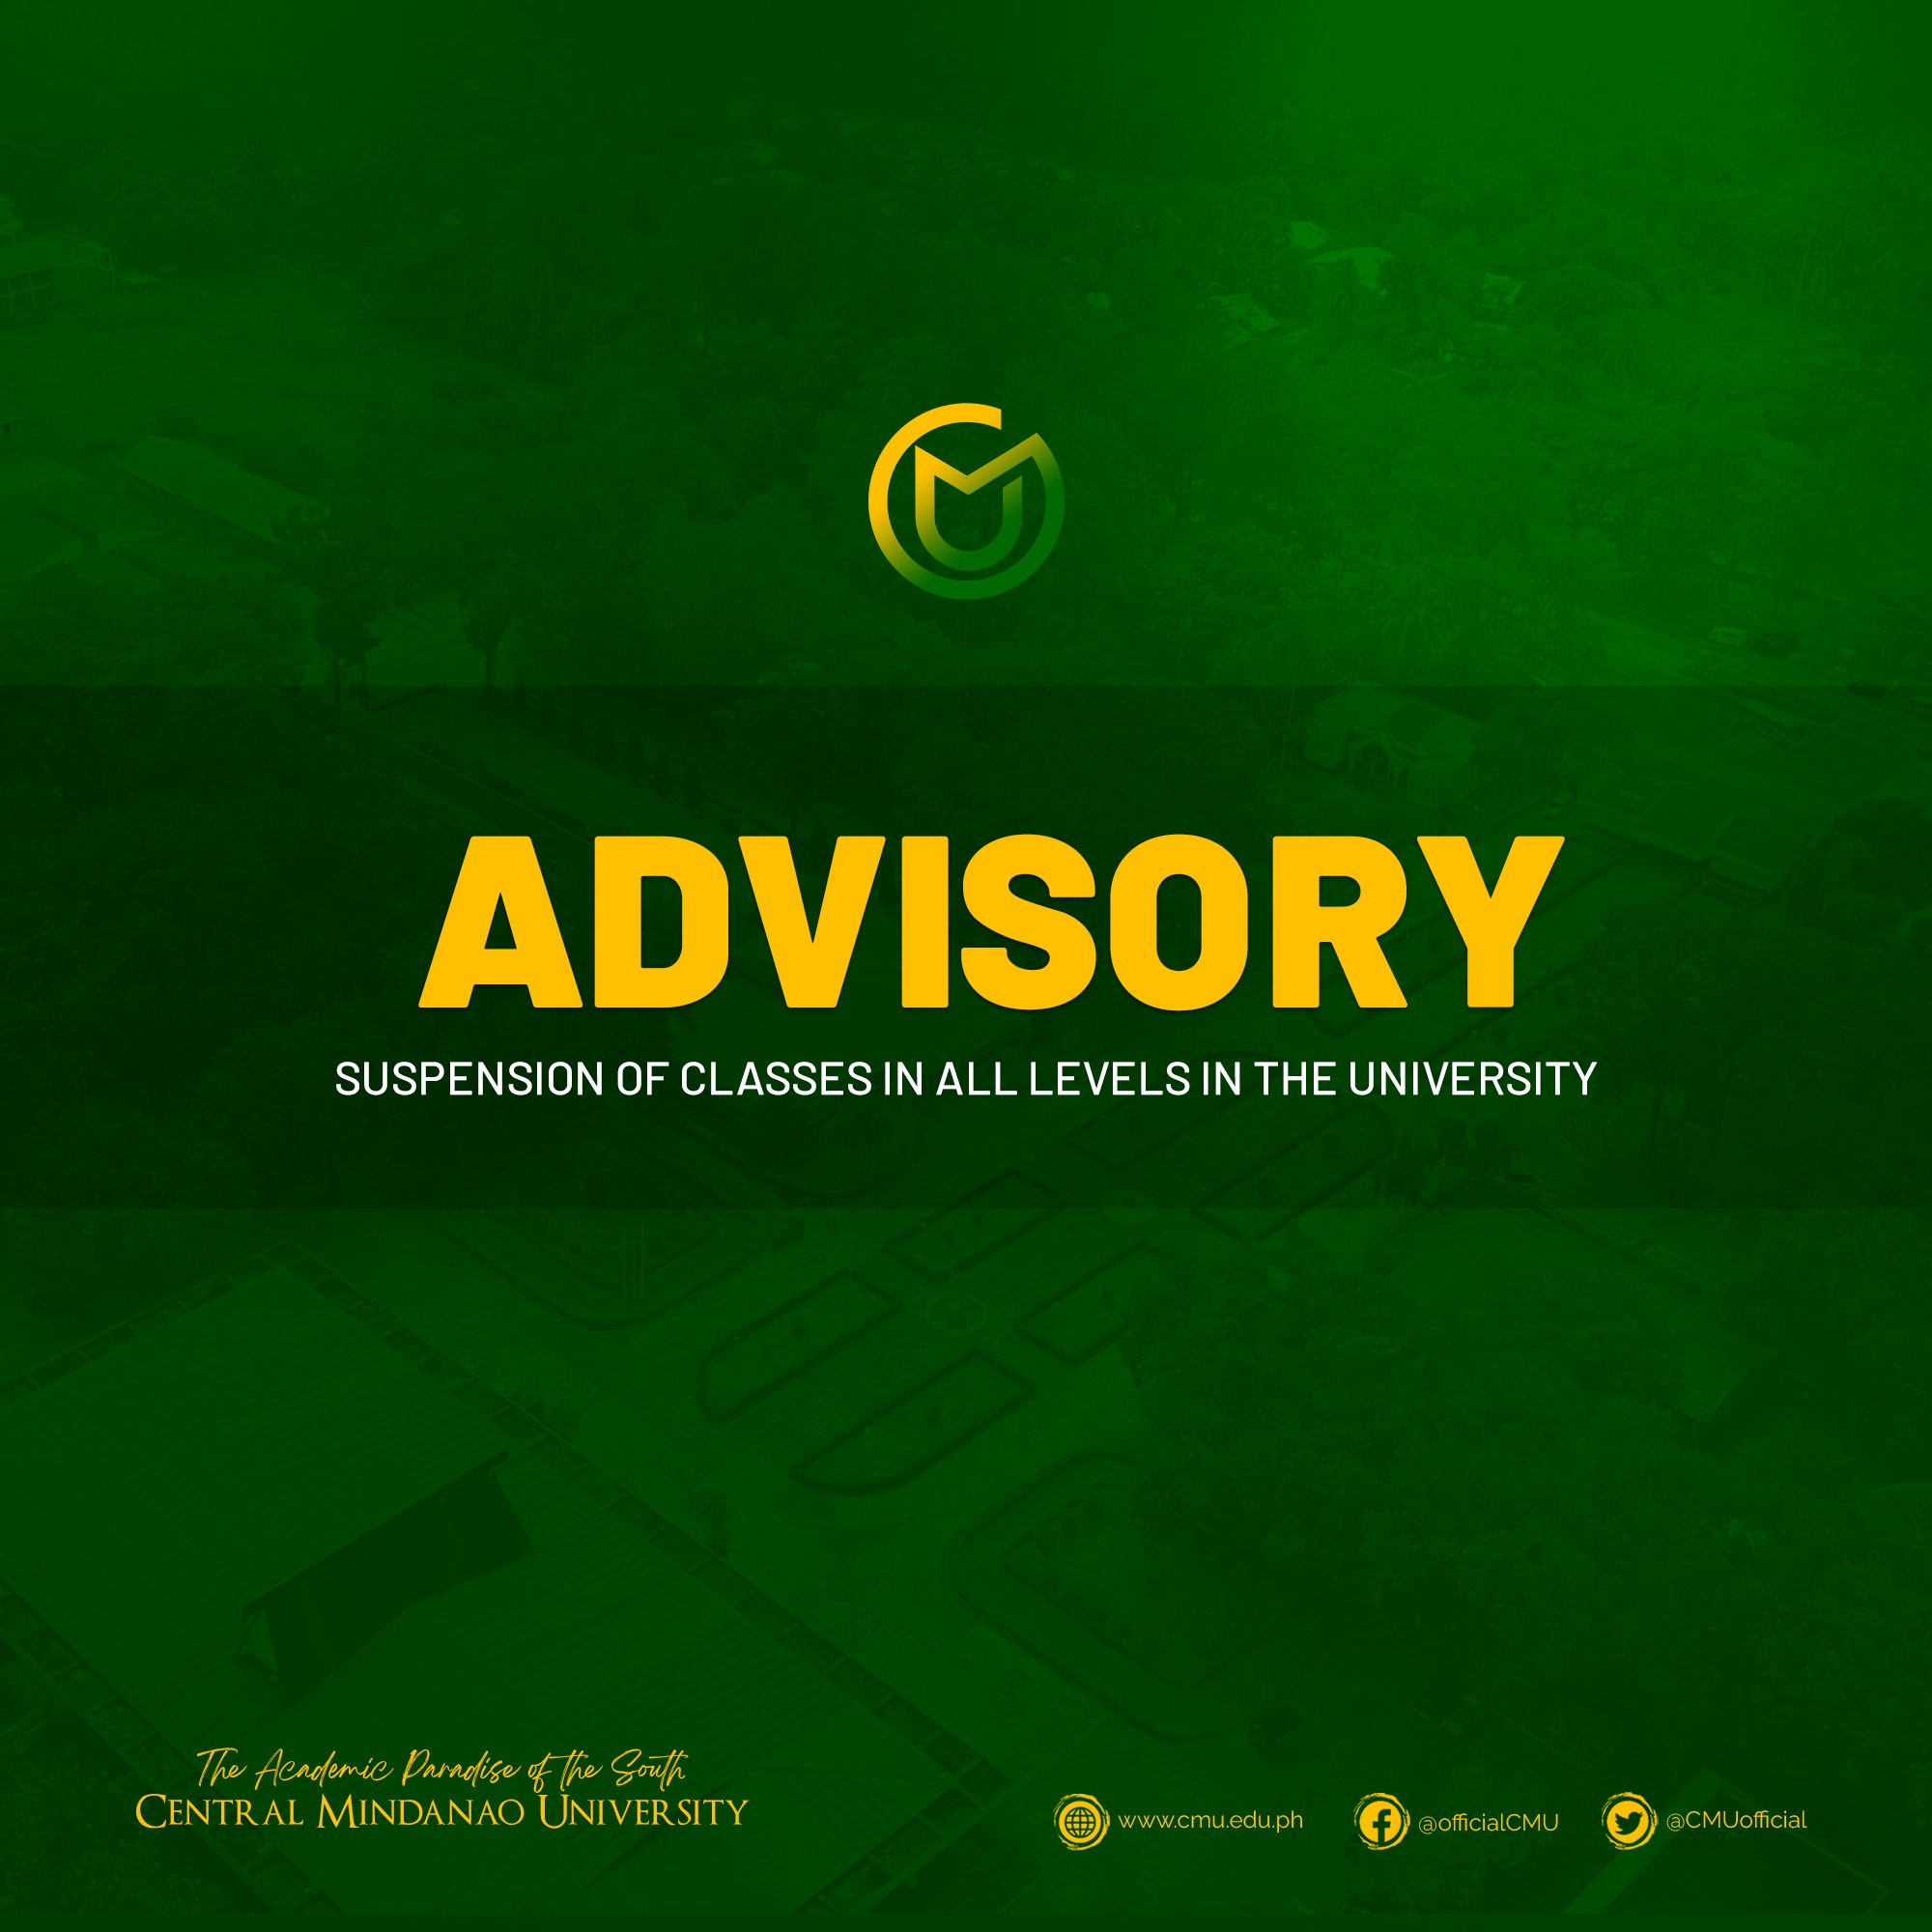 ADVISORY: Suspension of Classes in UP Cebu - University of the